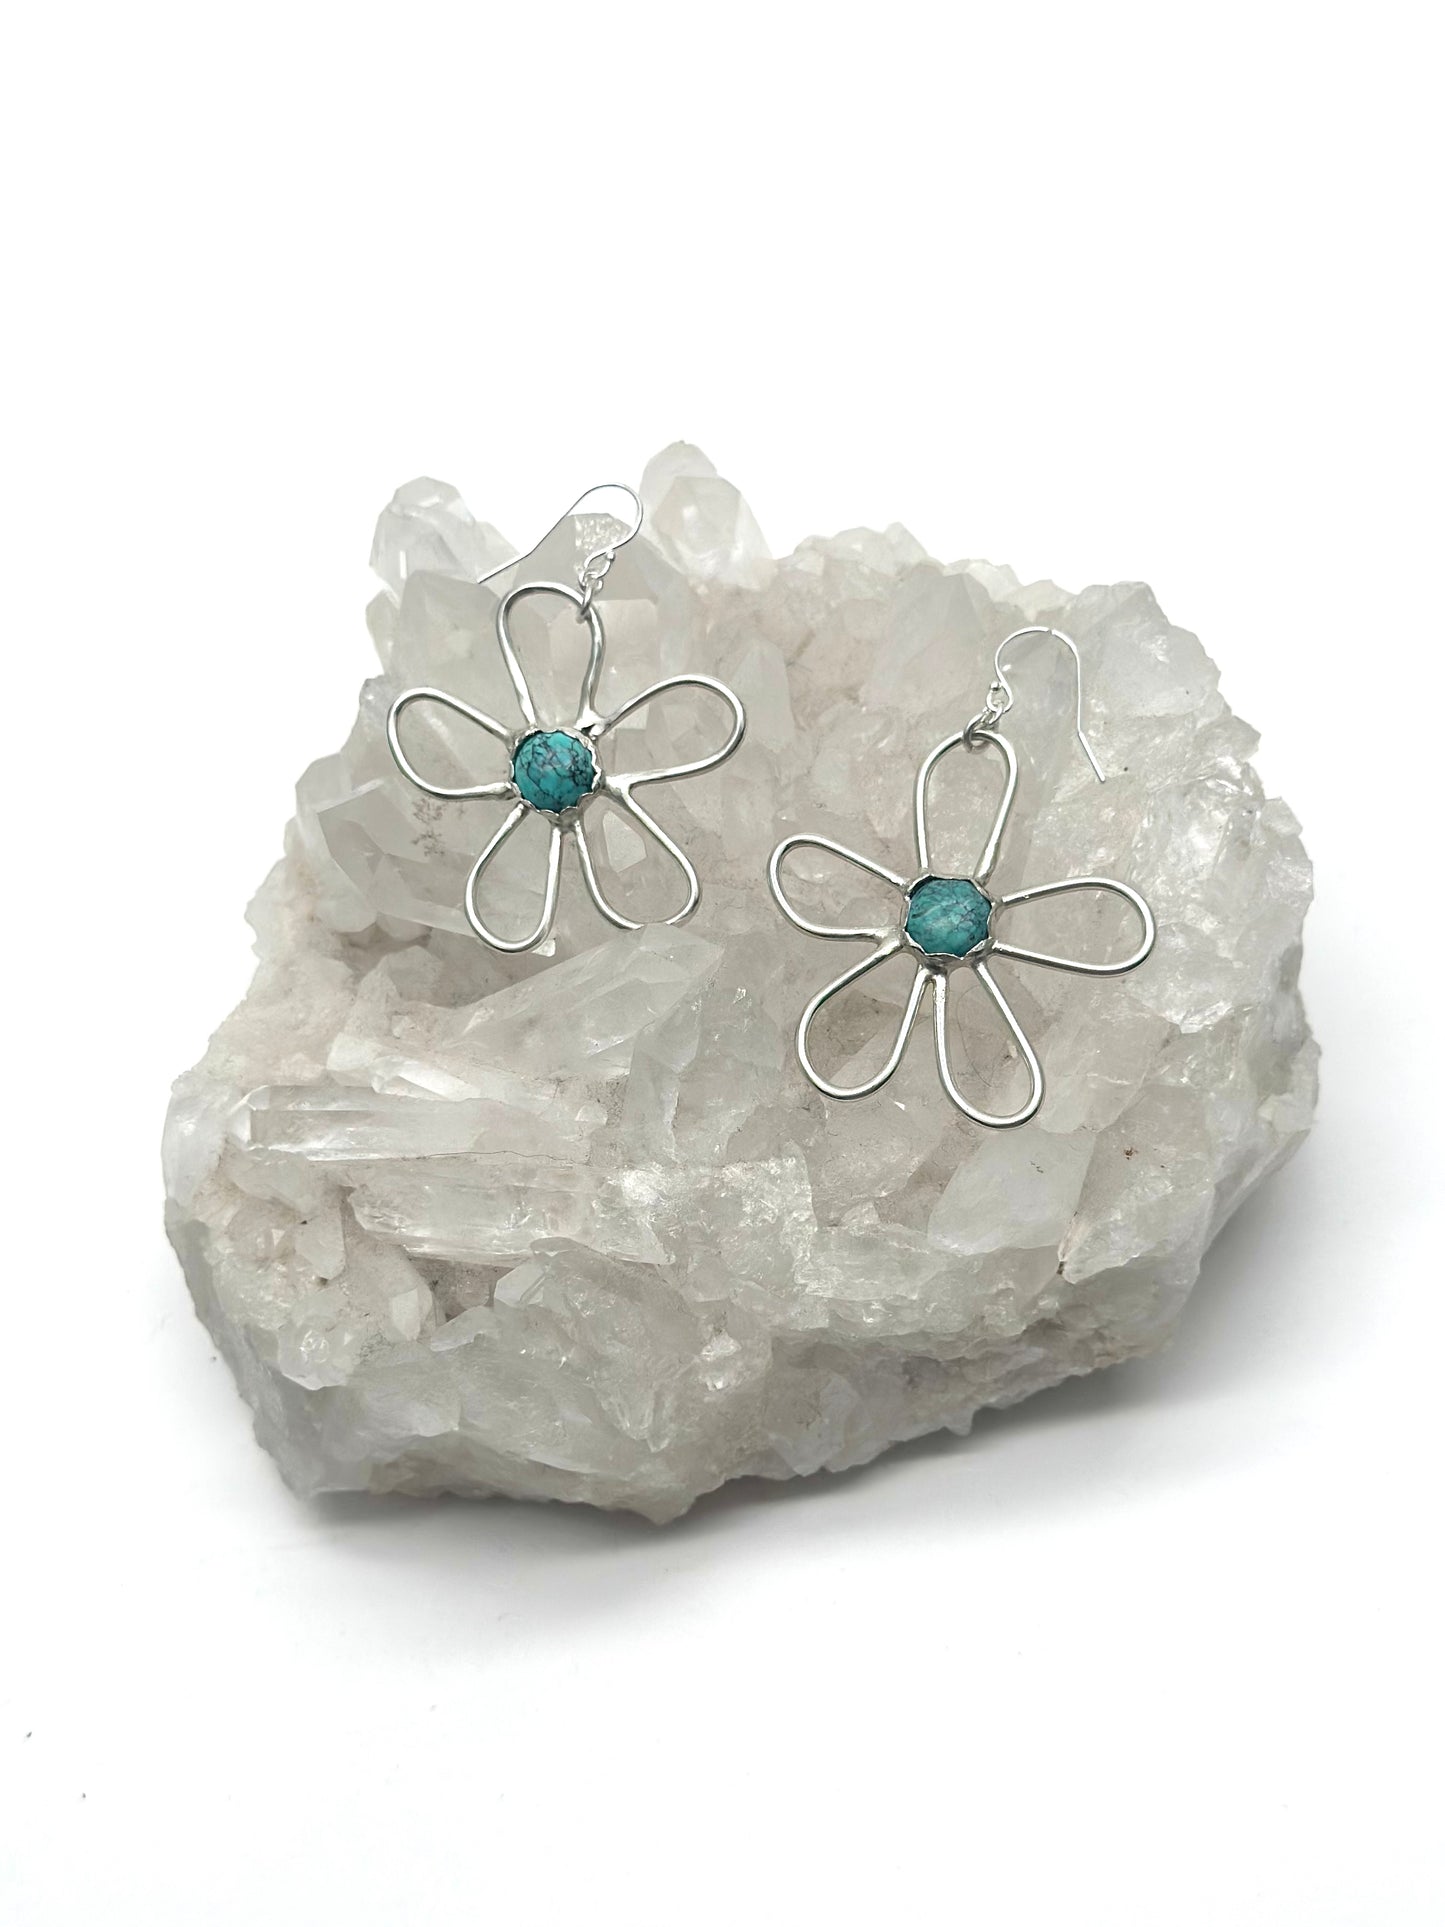 In Bloom Turquoise Earrings